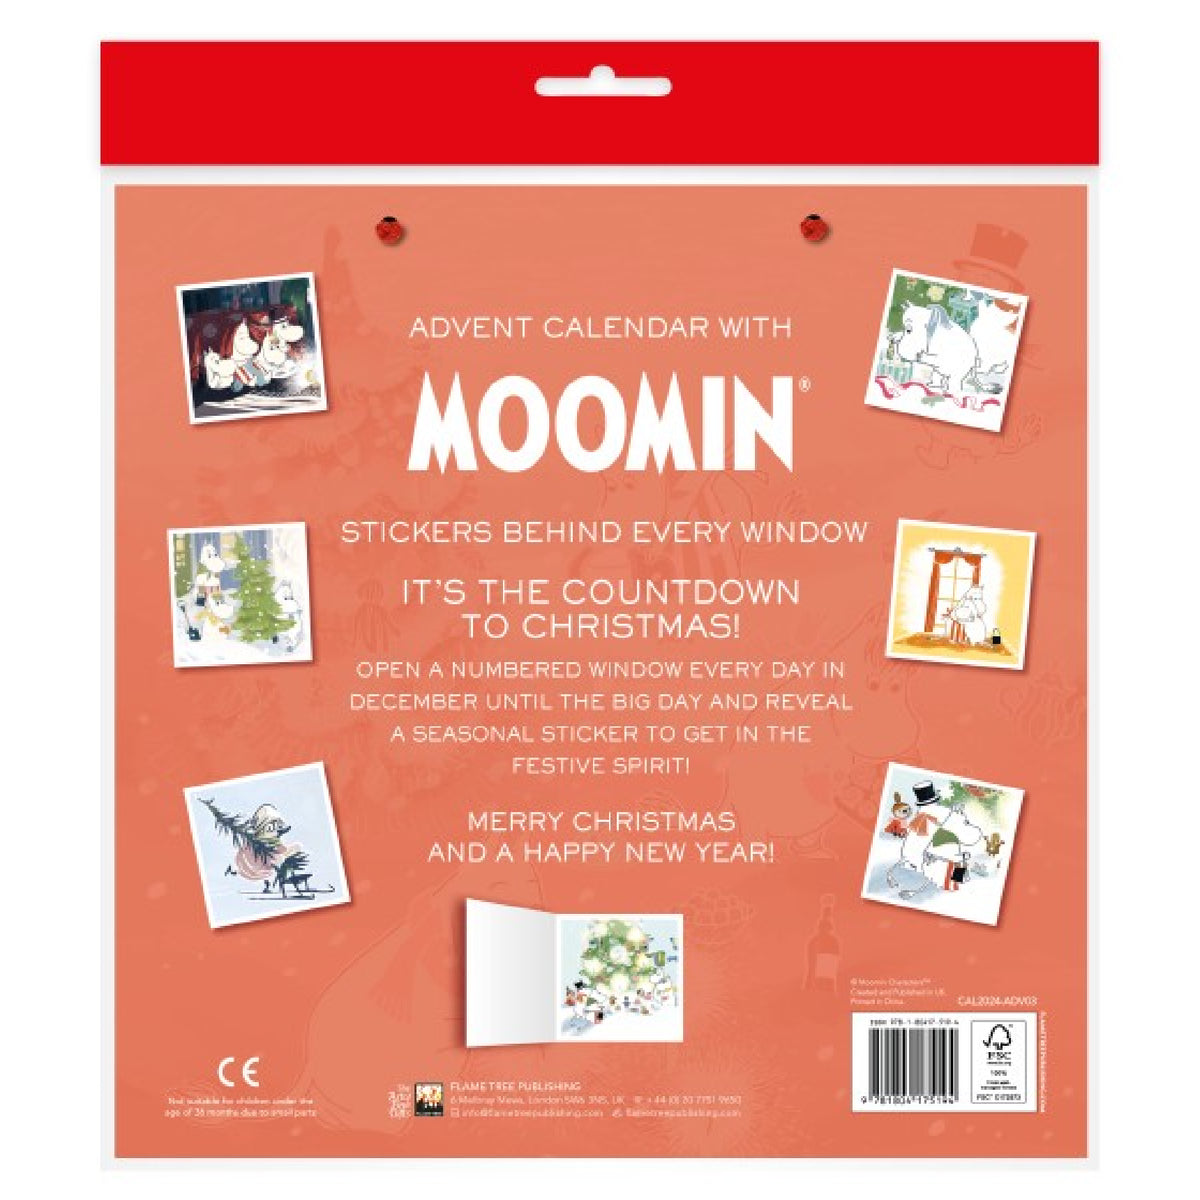 Moomin Advent Calendar Preparing For Christmas